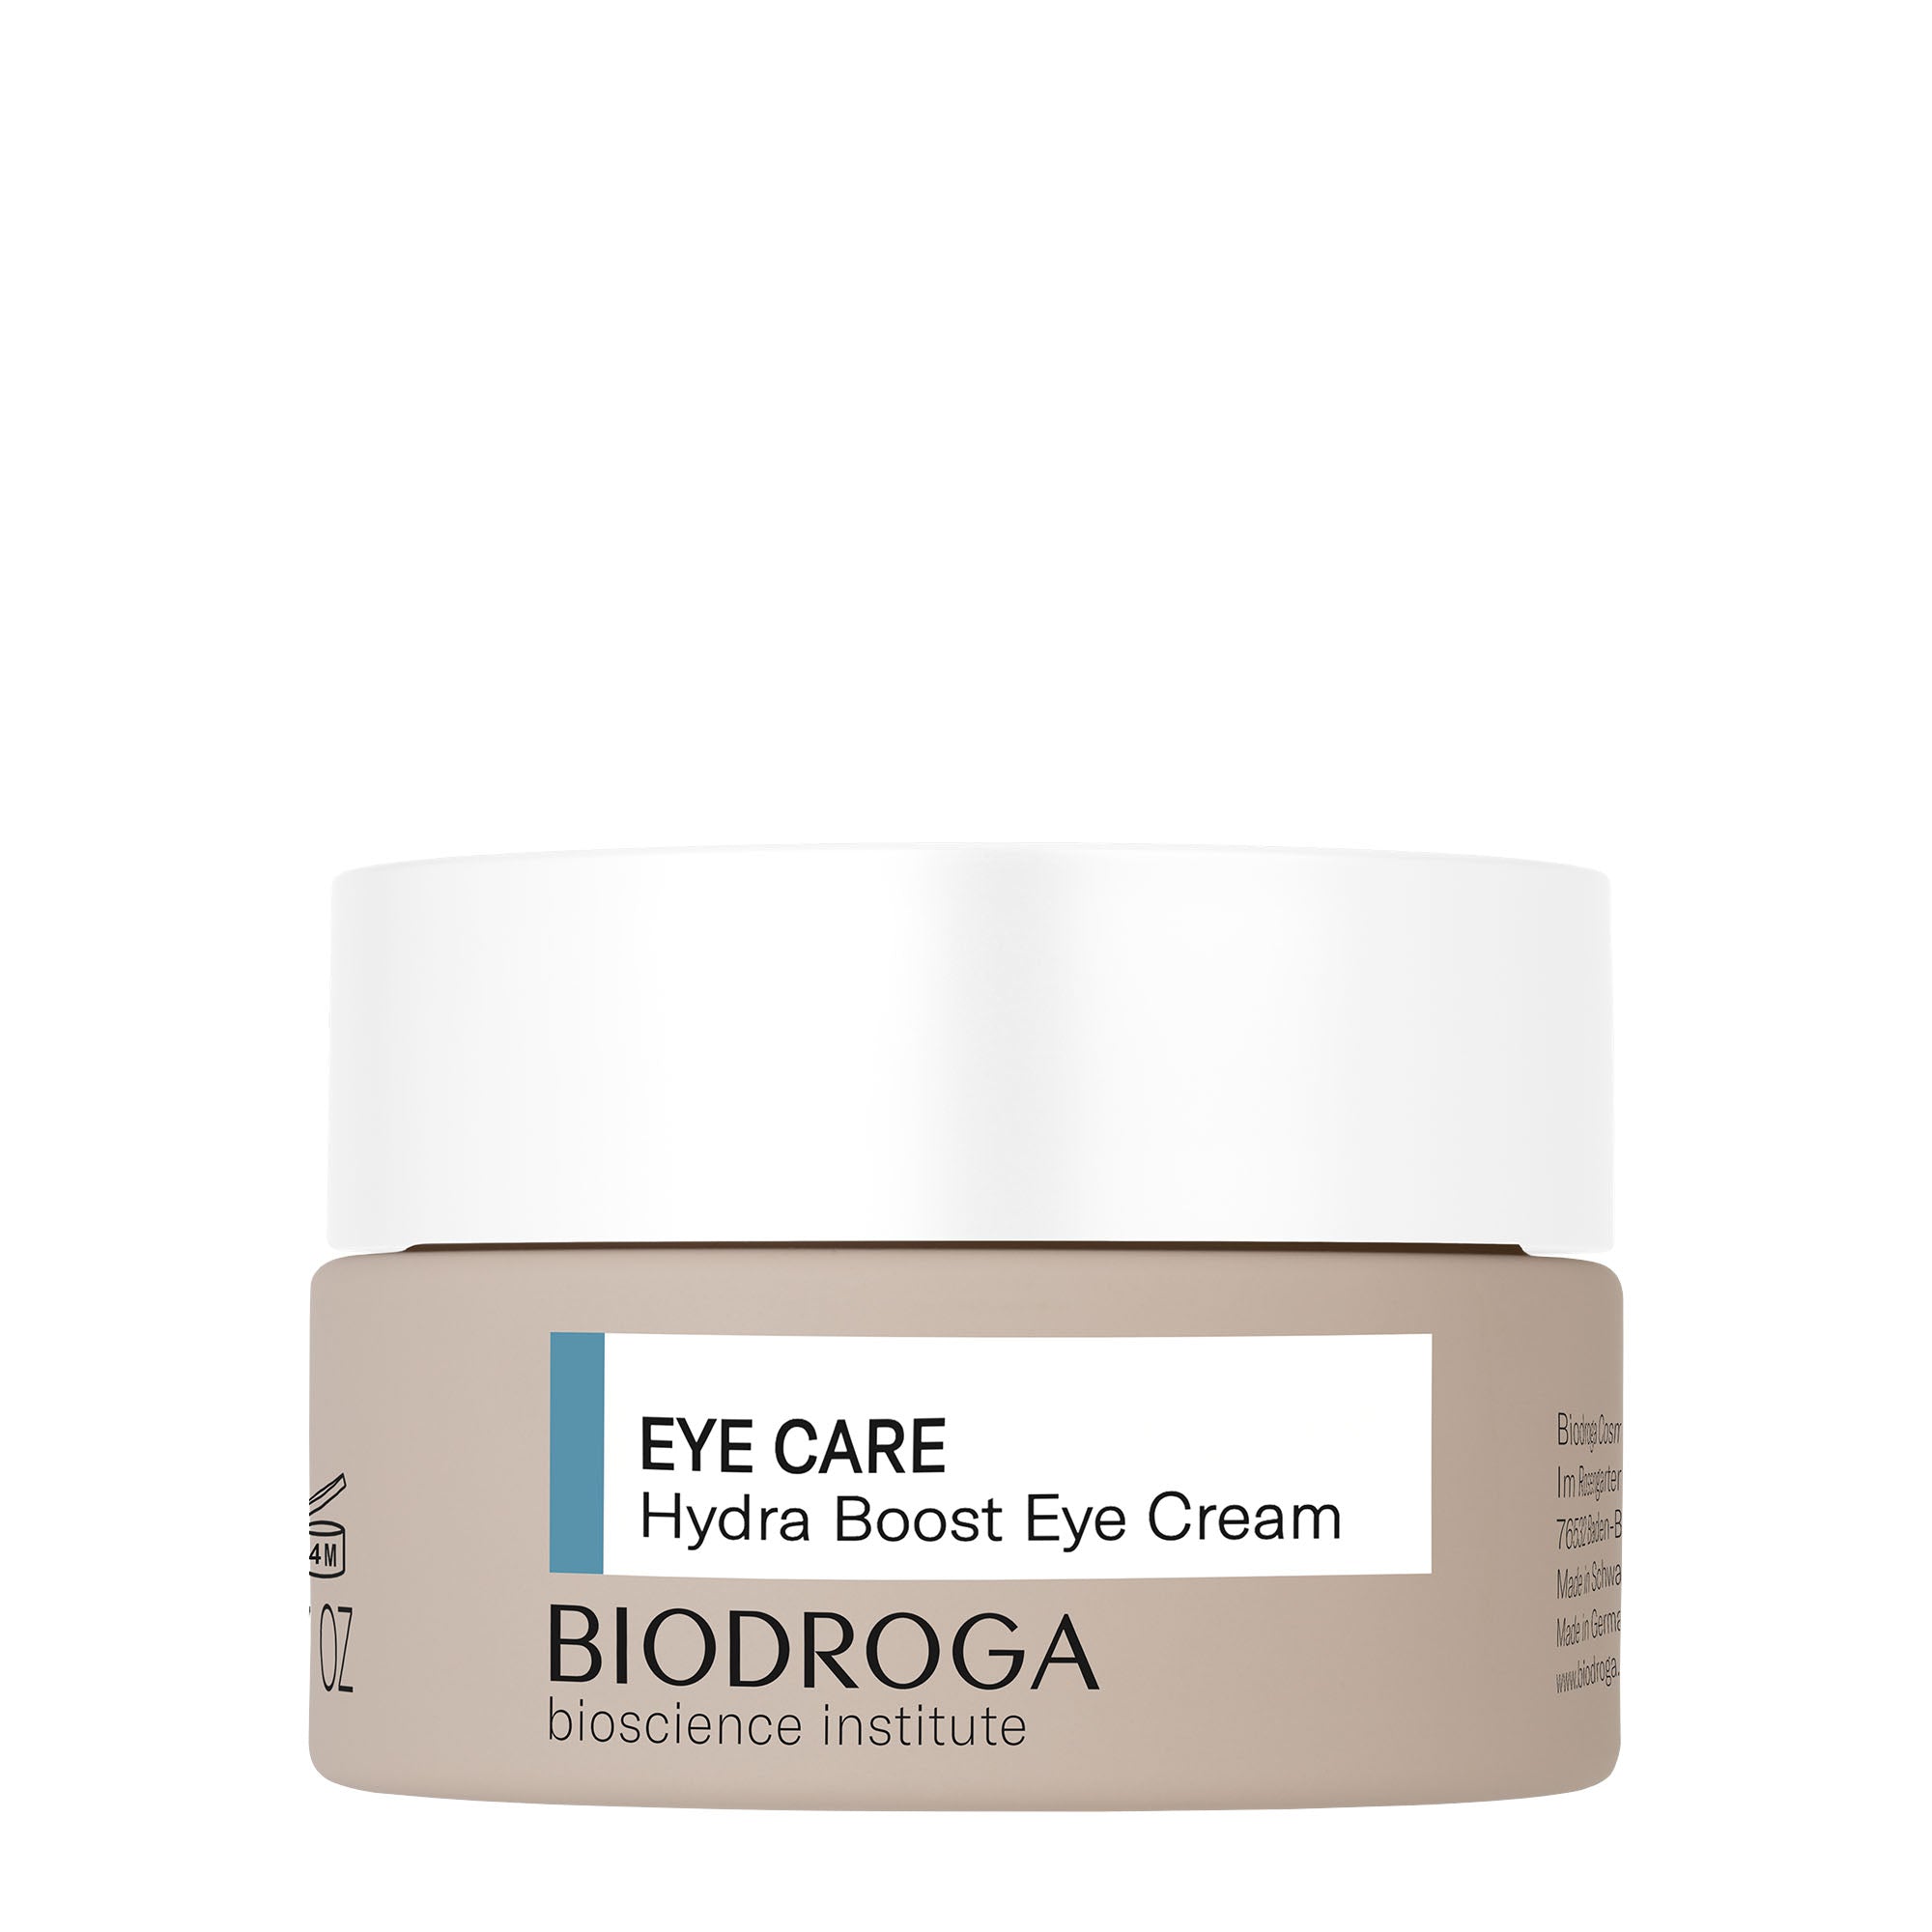 EYE CARE Hydra Boost Eye Cream Moisturiser - BIODROGA - True Beauty Skin & Body Care - BIODROGA Australia